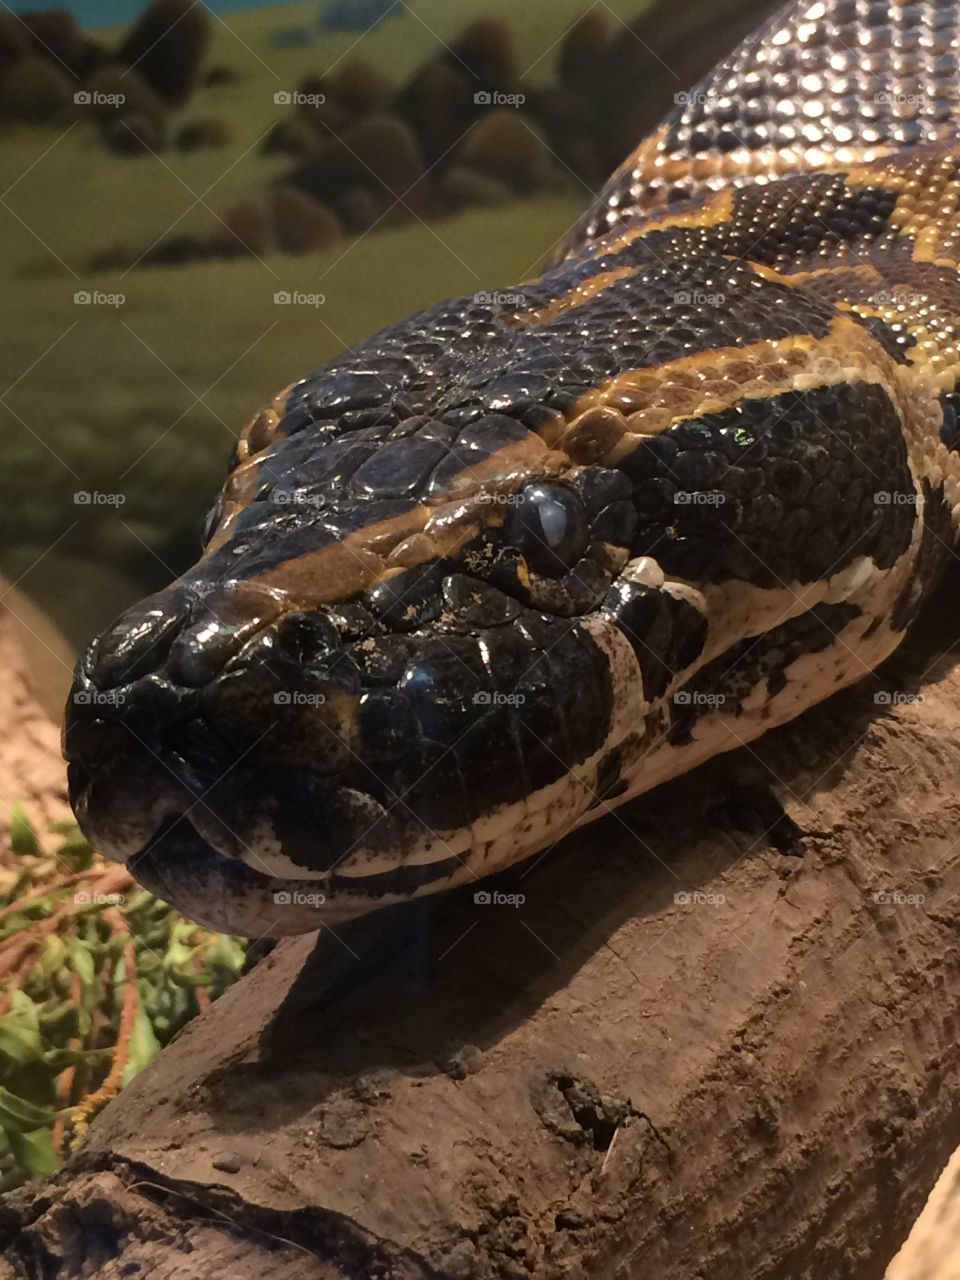 Snake at the zoo